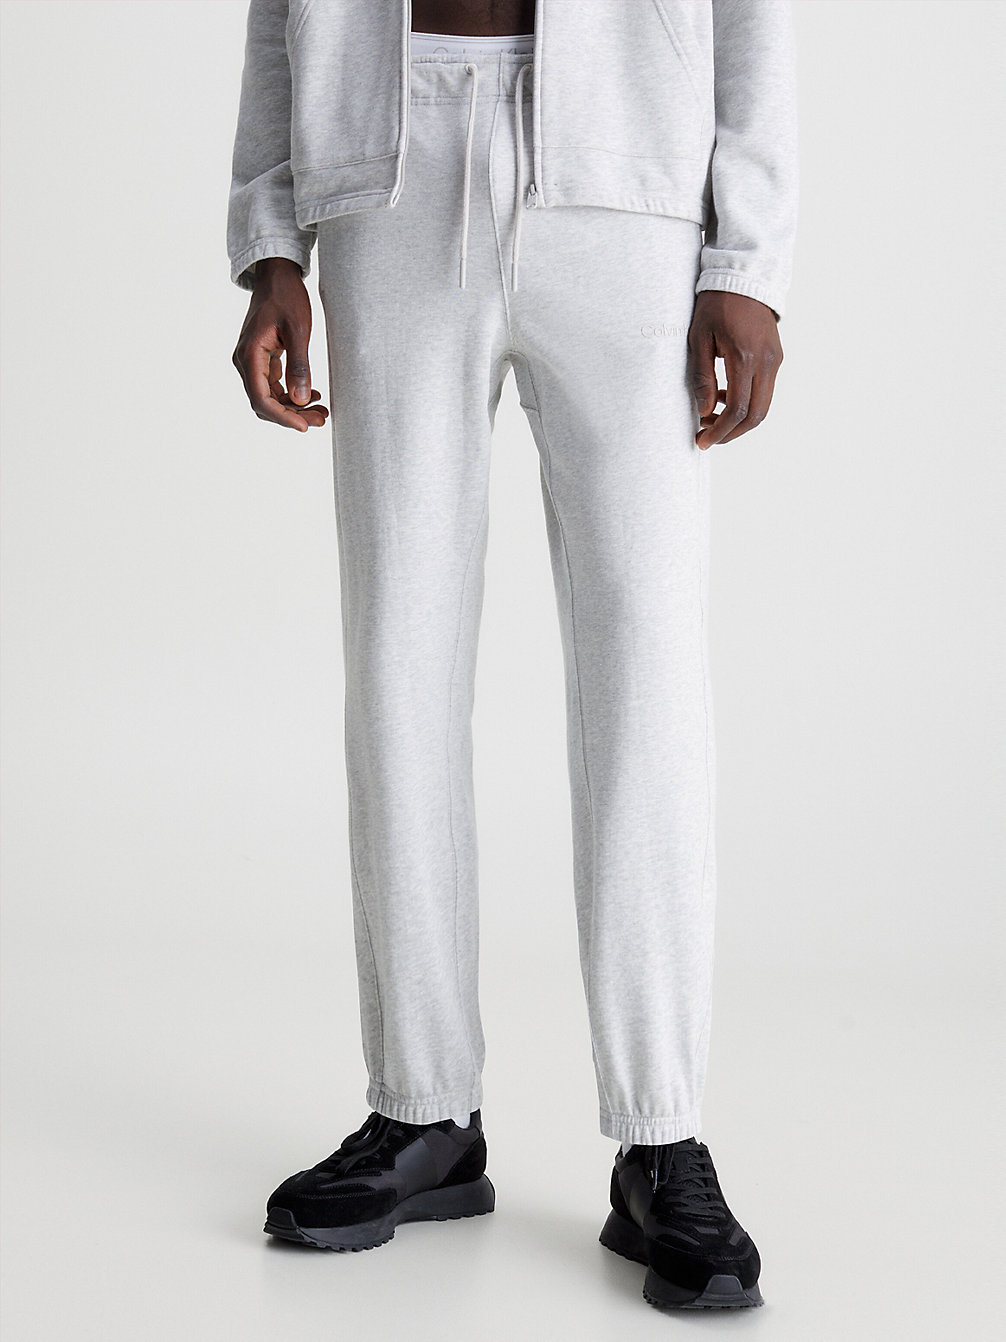 ATHLETIC GREY HEATHER Pantalon De Jogging En Tissu Éponge De Coton undefined hommes Calvin Klein